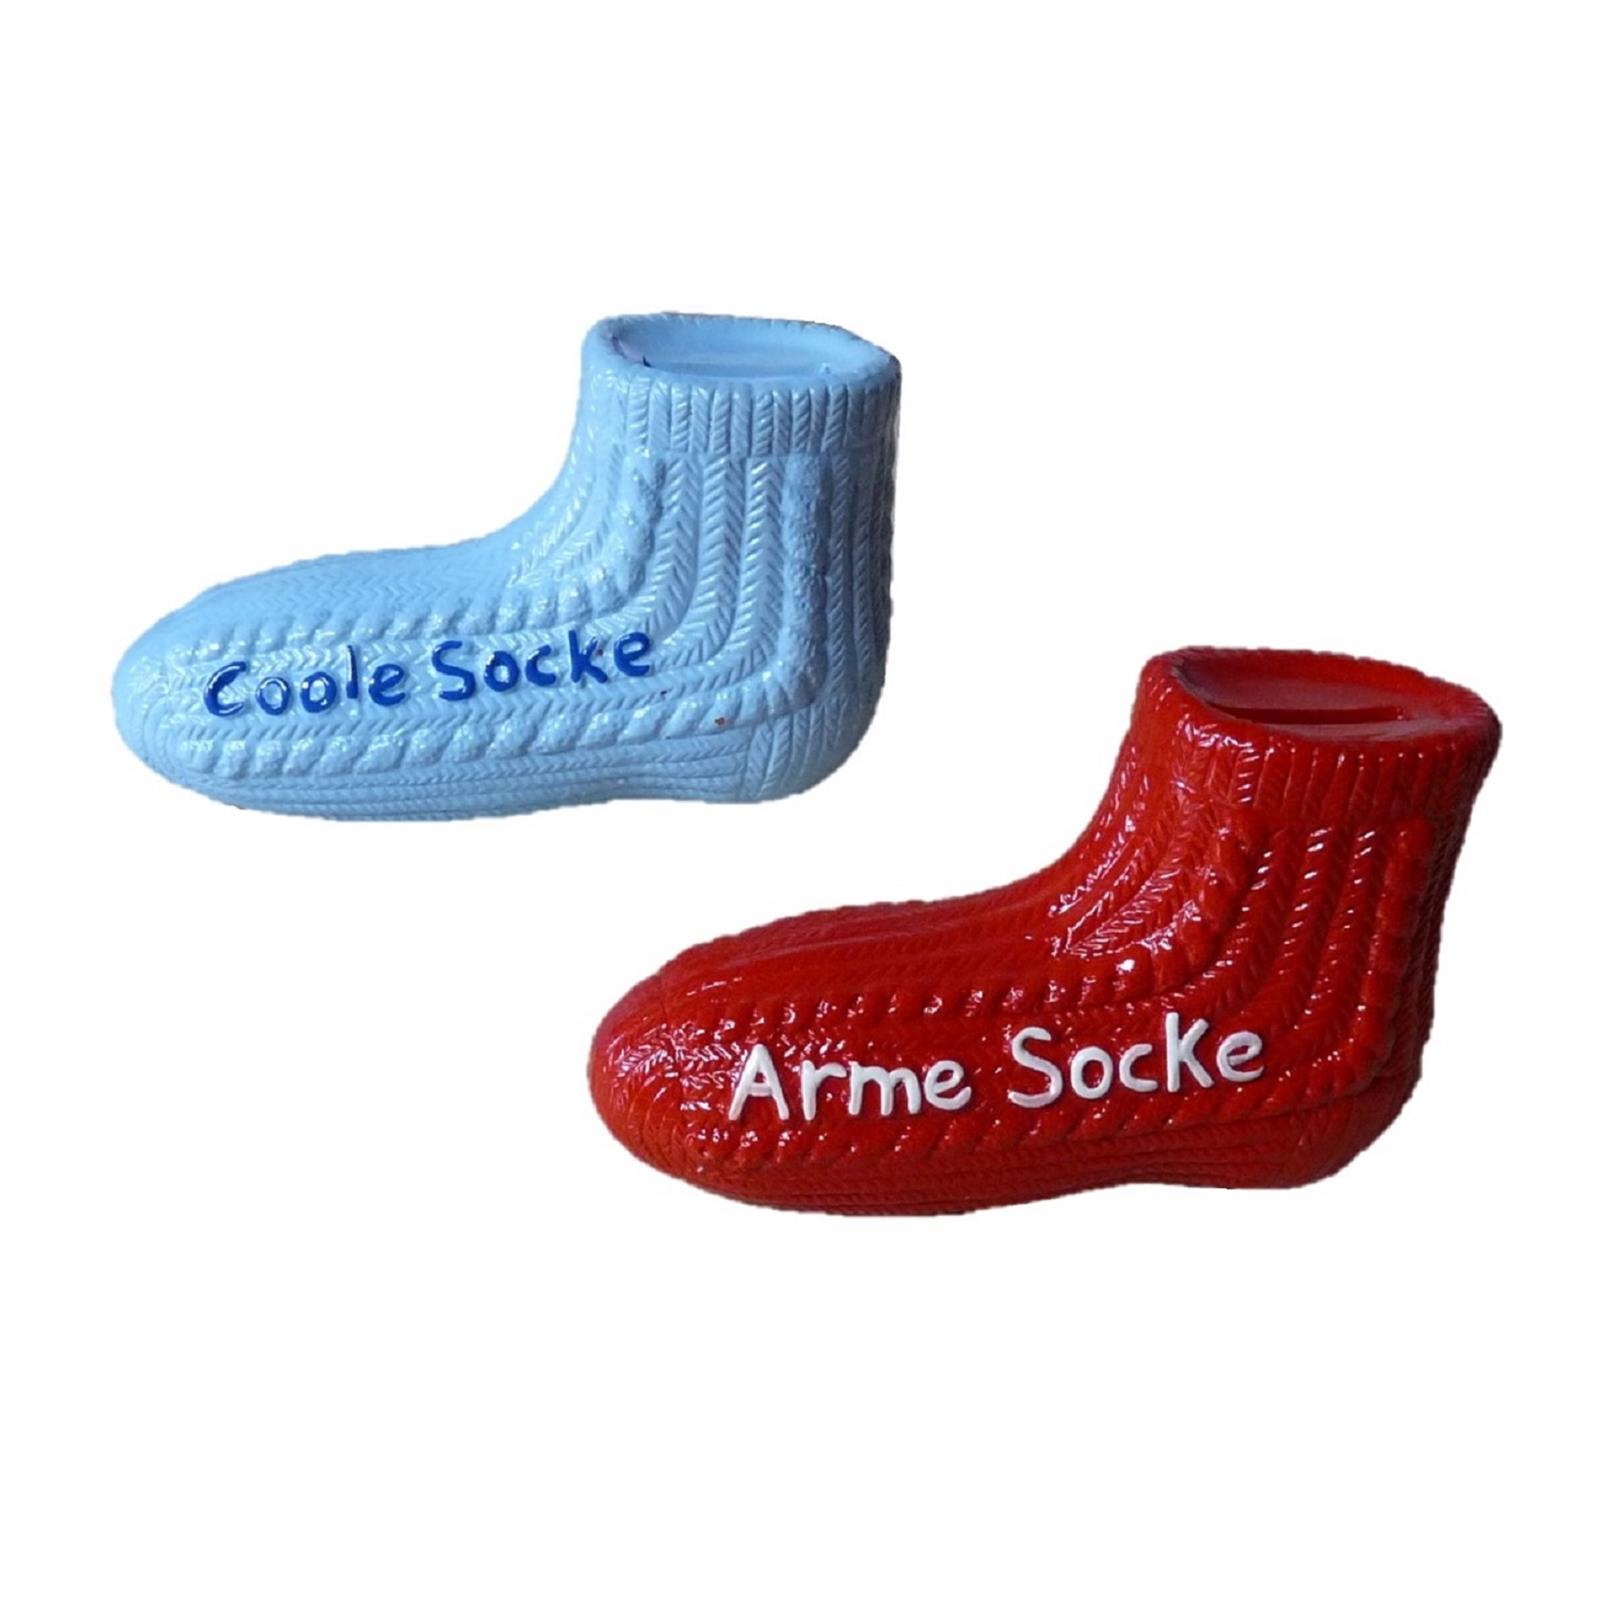 Witzige Spardose Coole Socke 10 x 16 cm Sparbüchse in Hellblau Geldgeschenke 